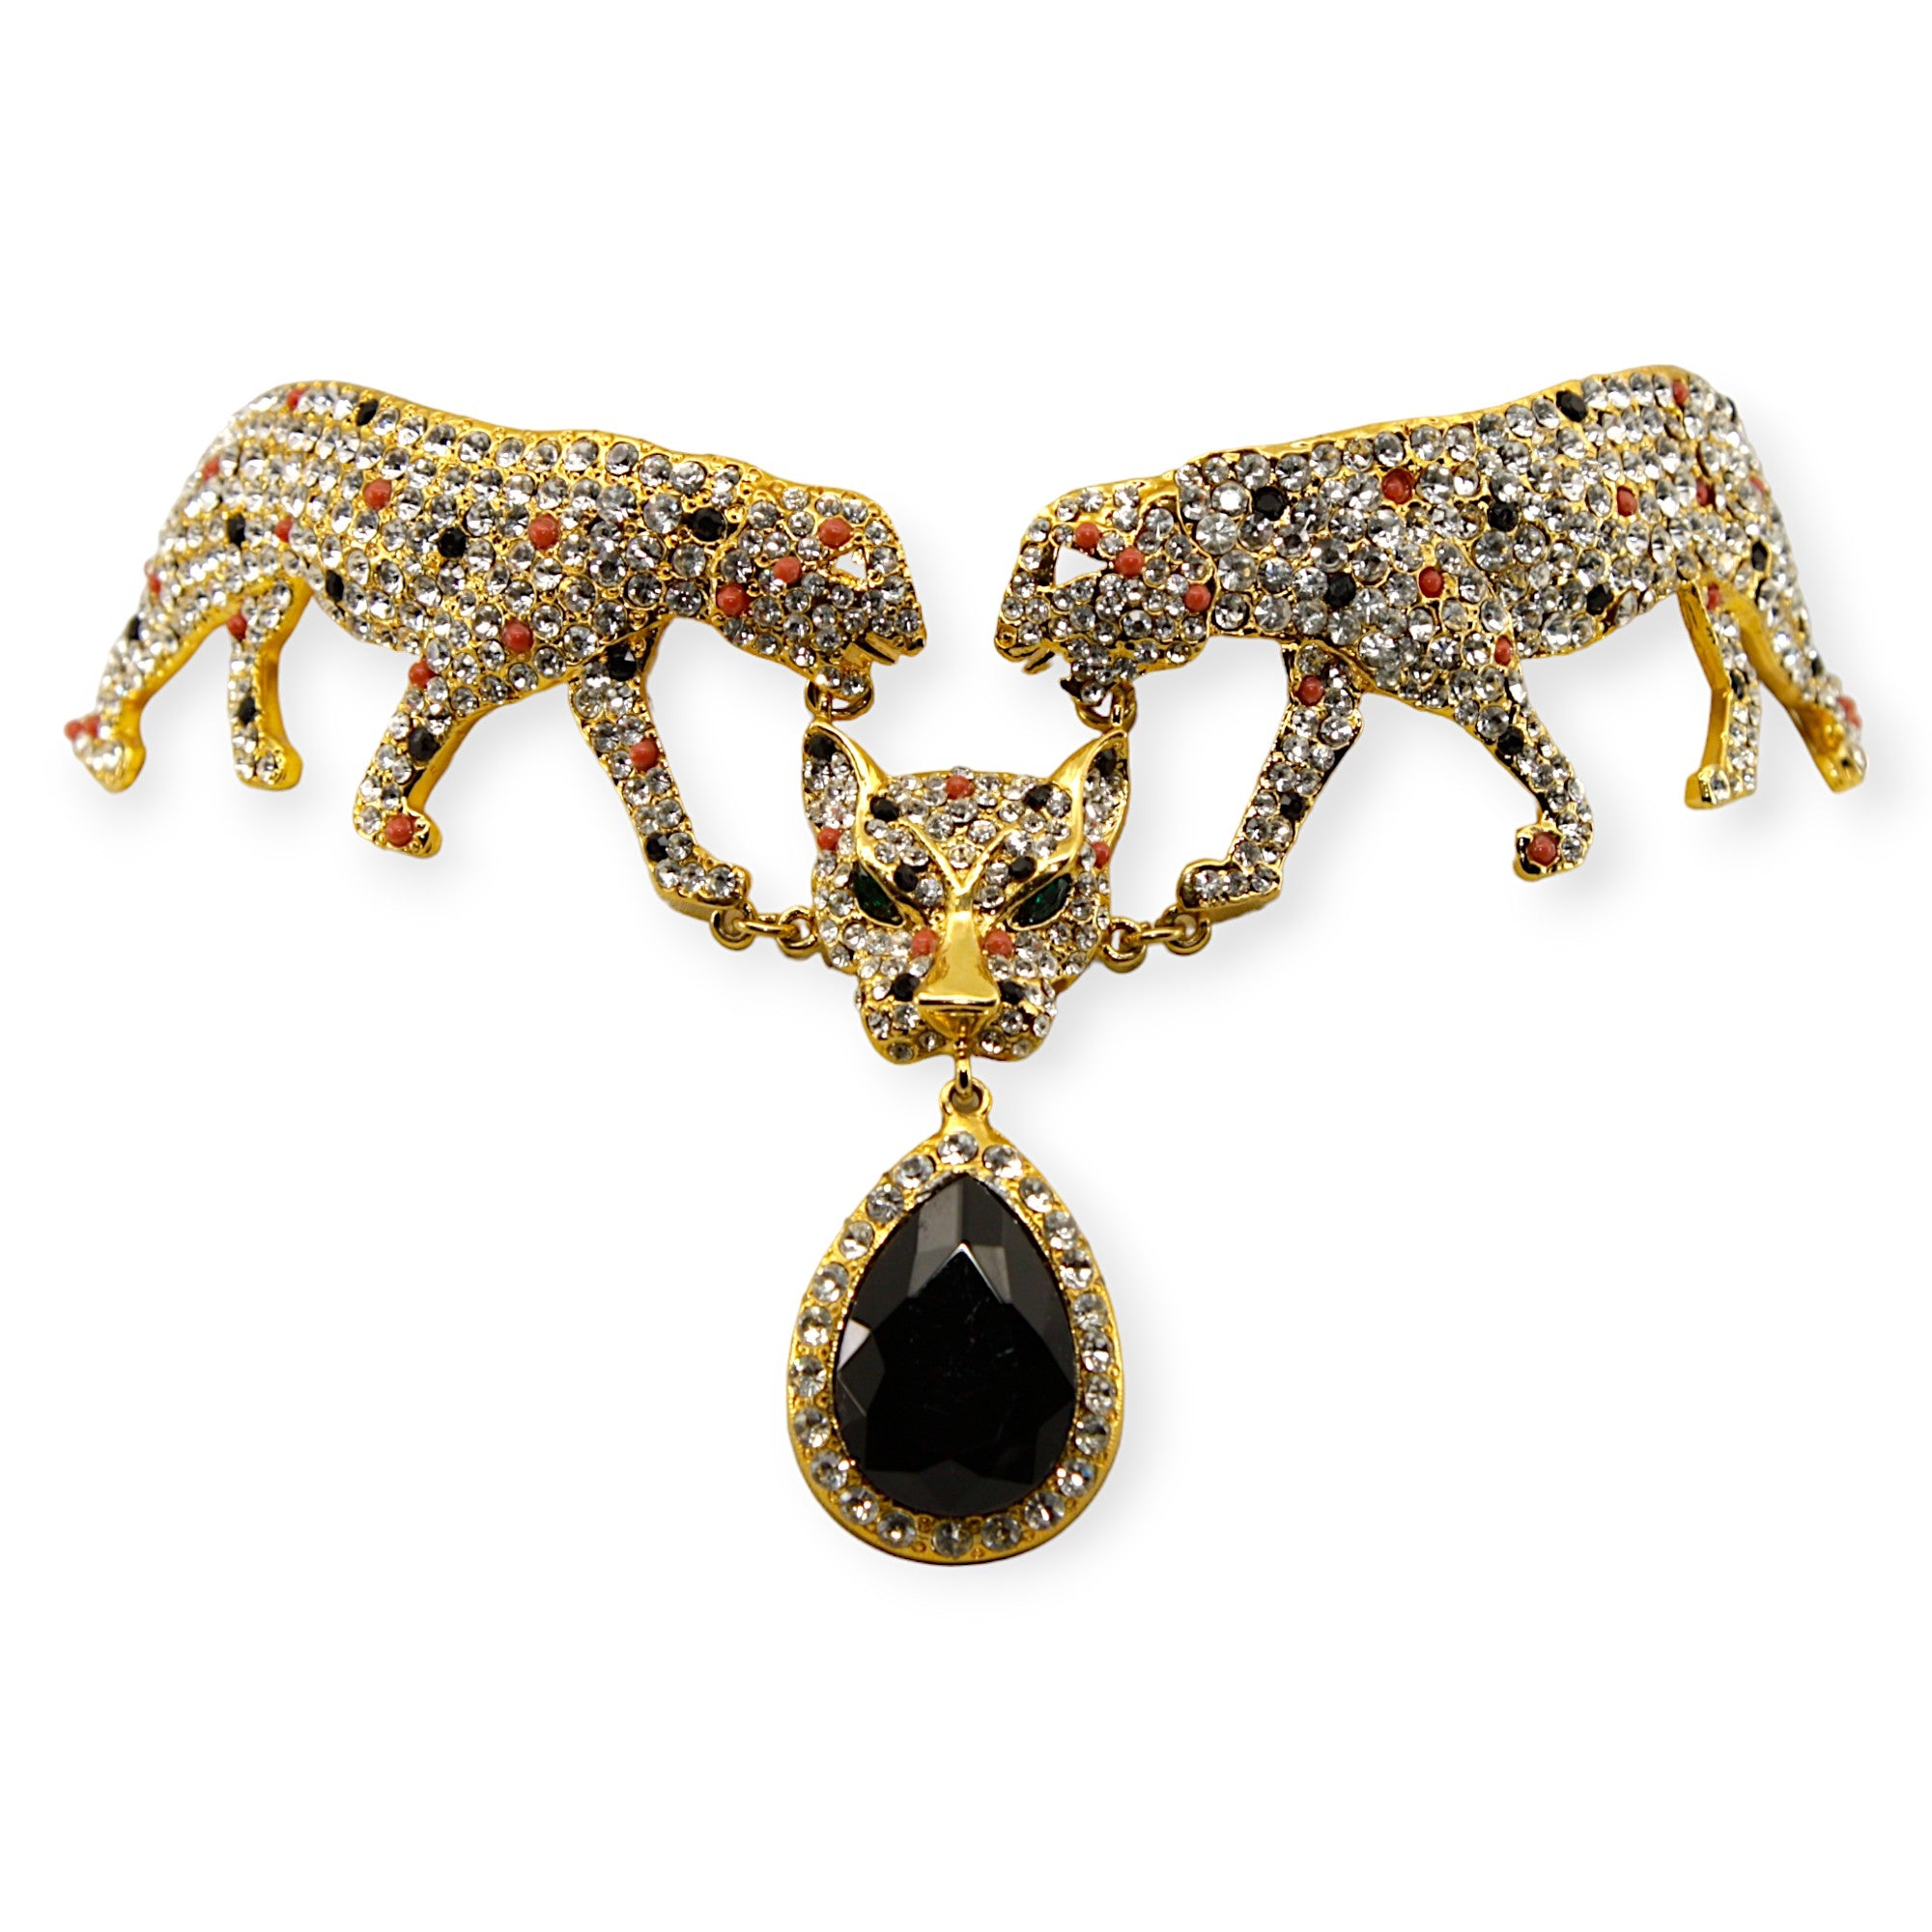 Jaguar Chocker Necklace With Black Drop